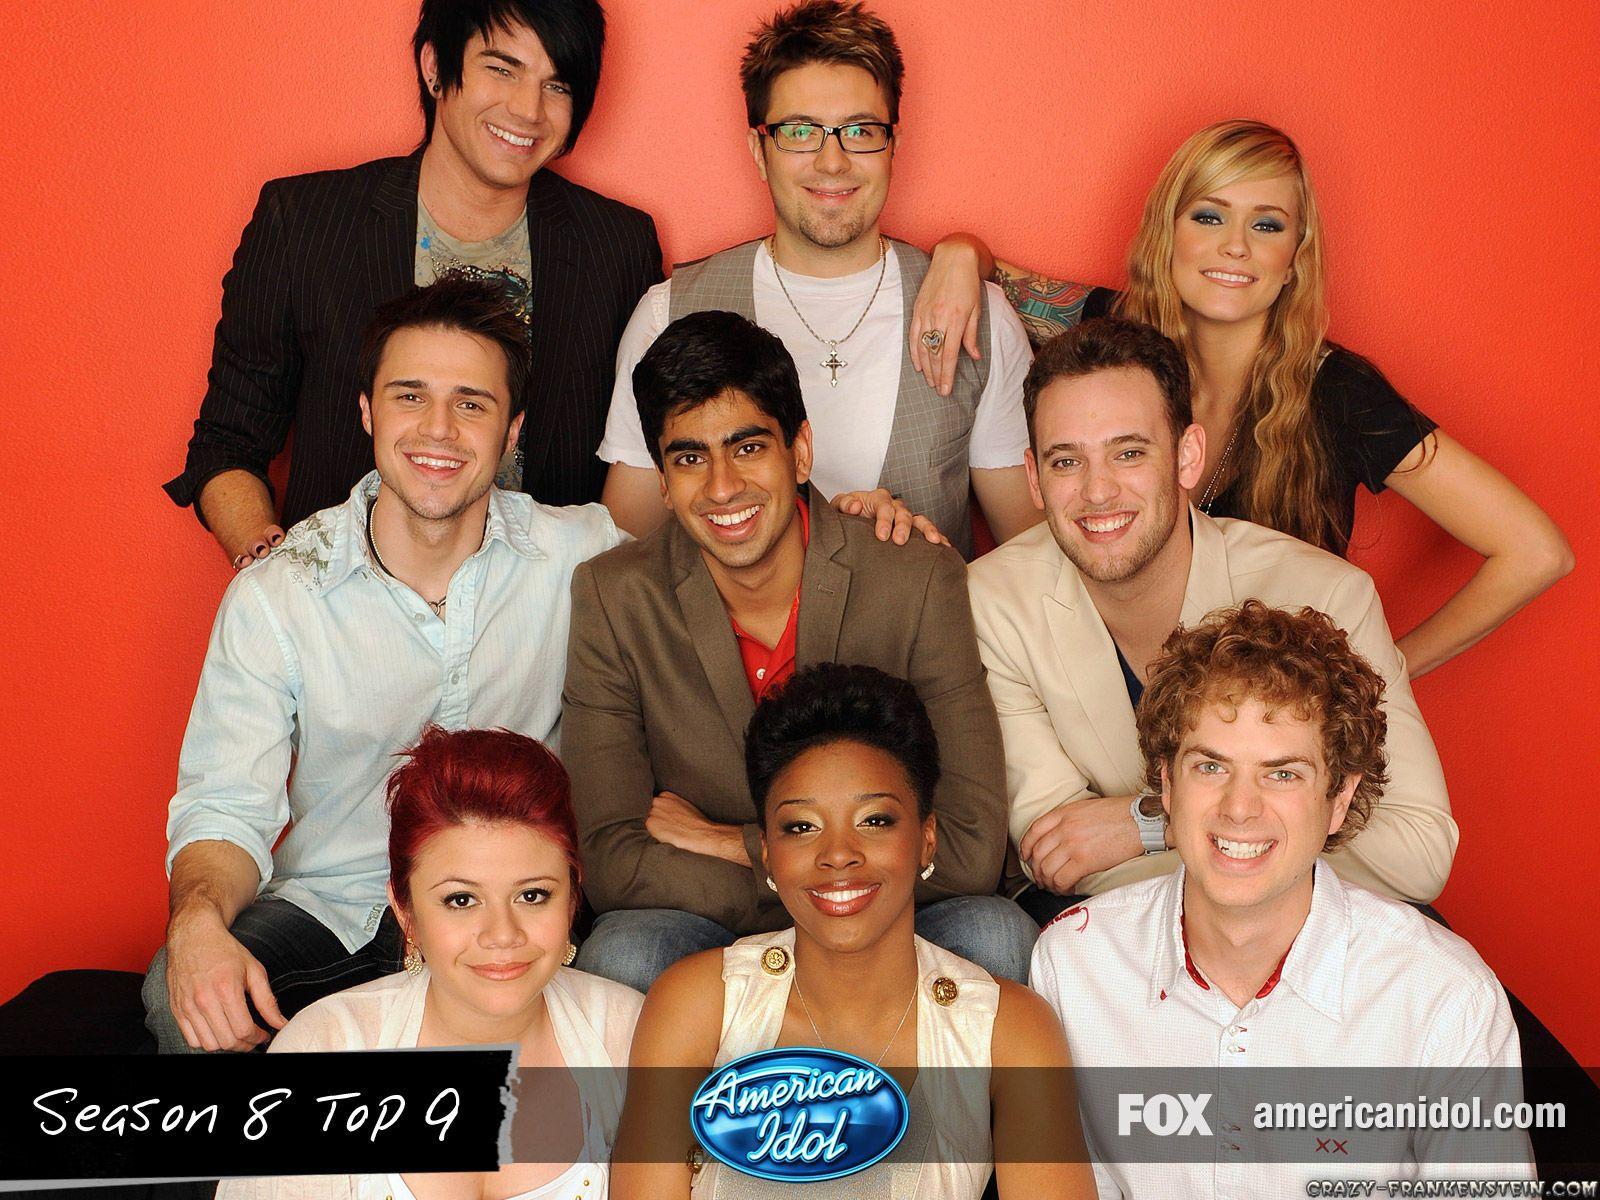 American Idol wallpaper